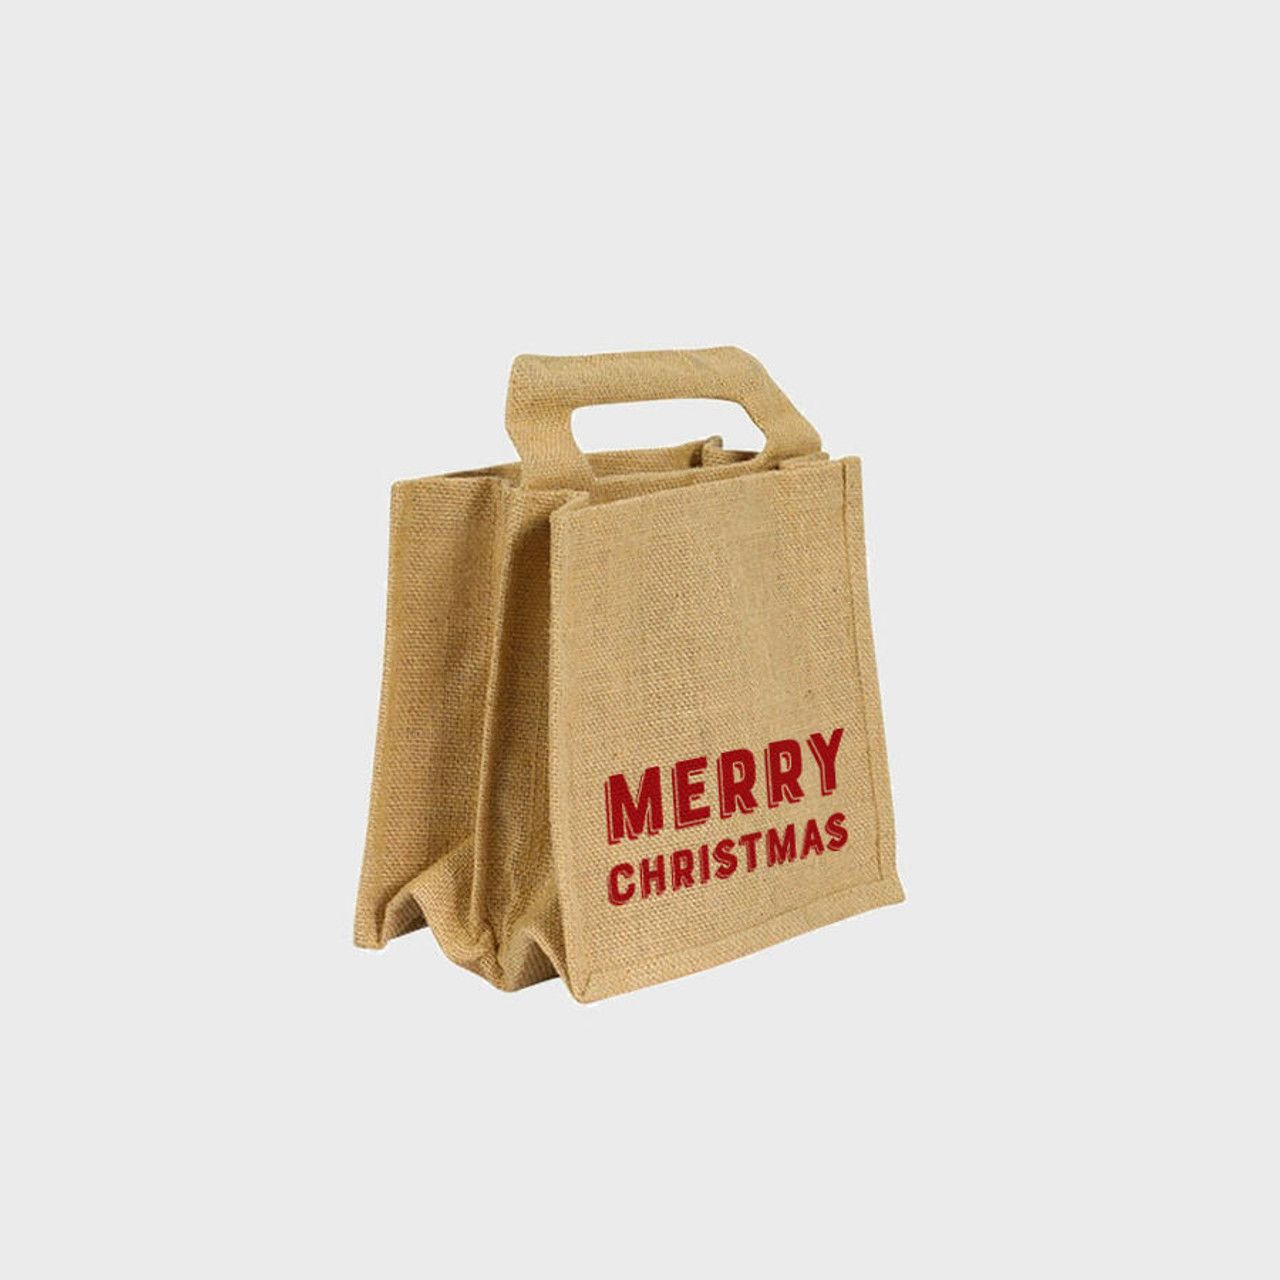 6 Beer Bottle Merry Christmas Jute Bag Hamper Boxes